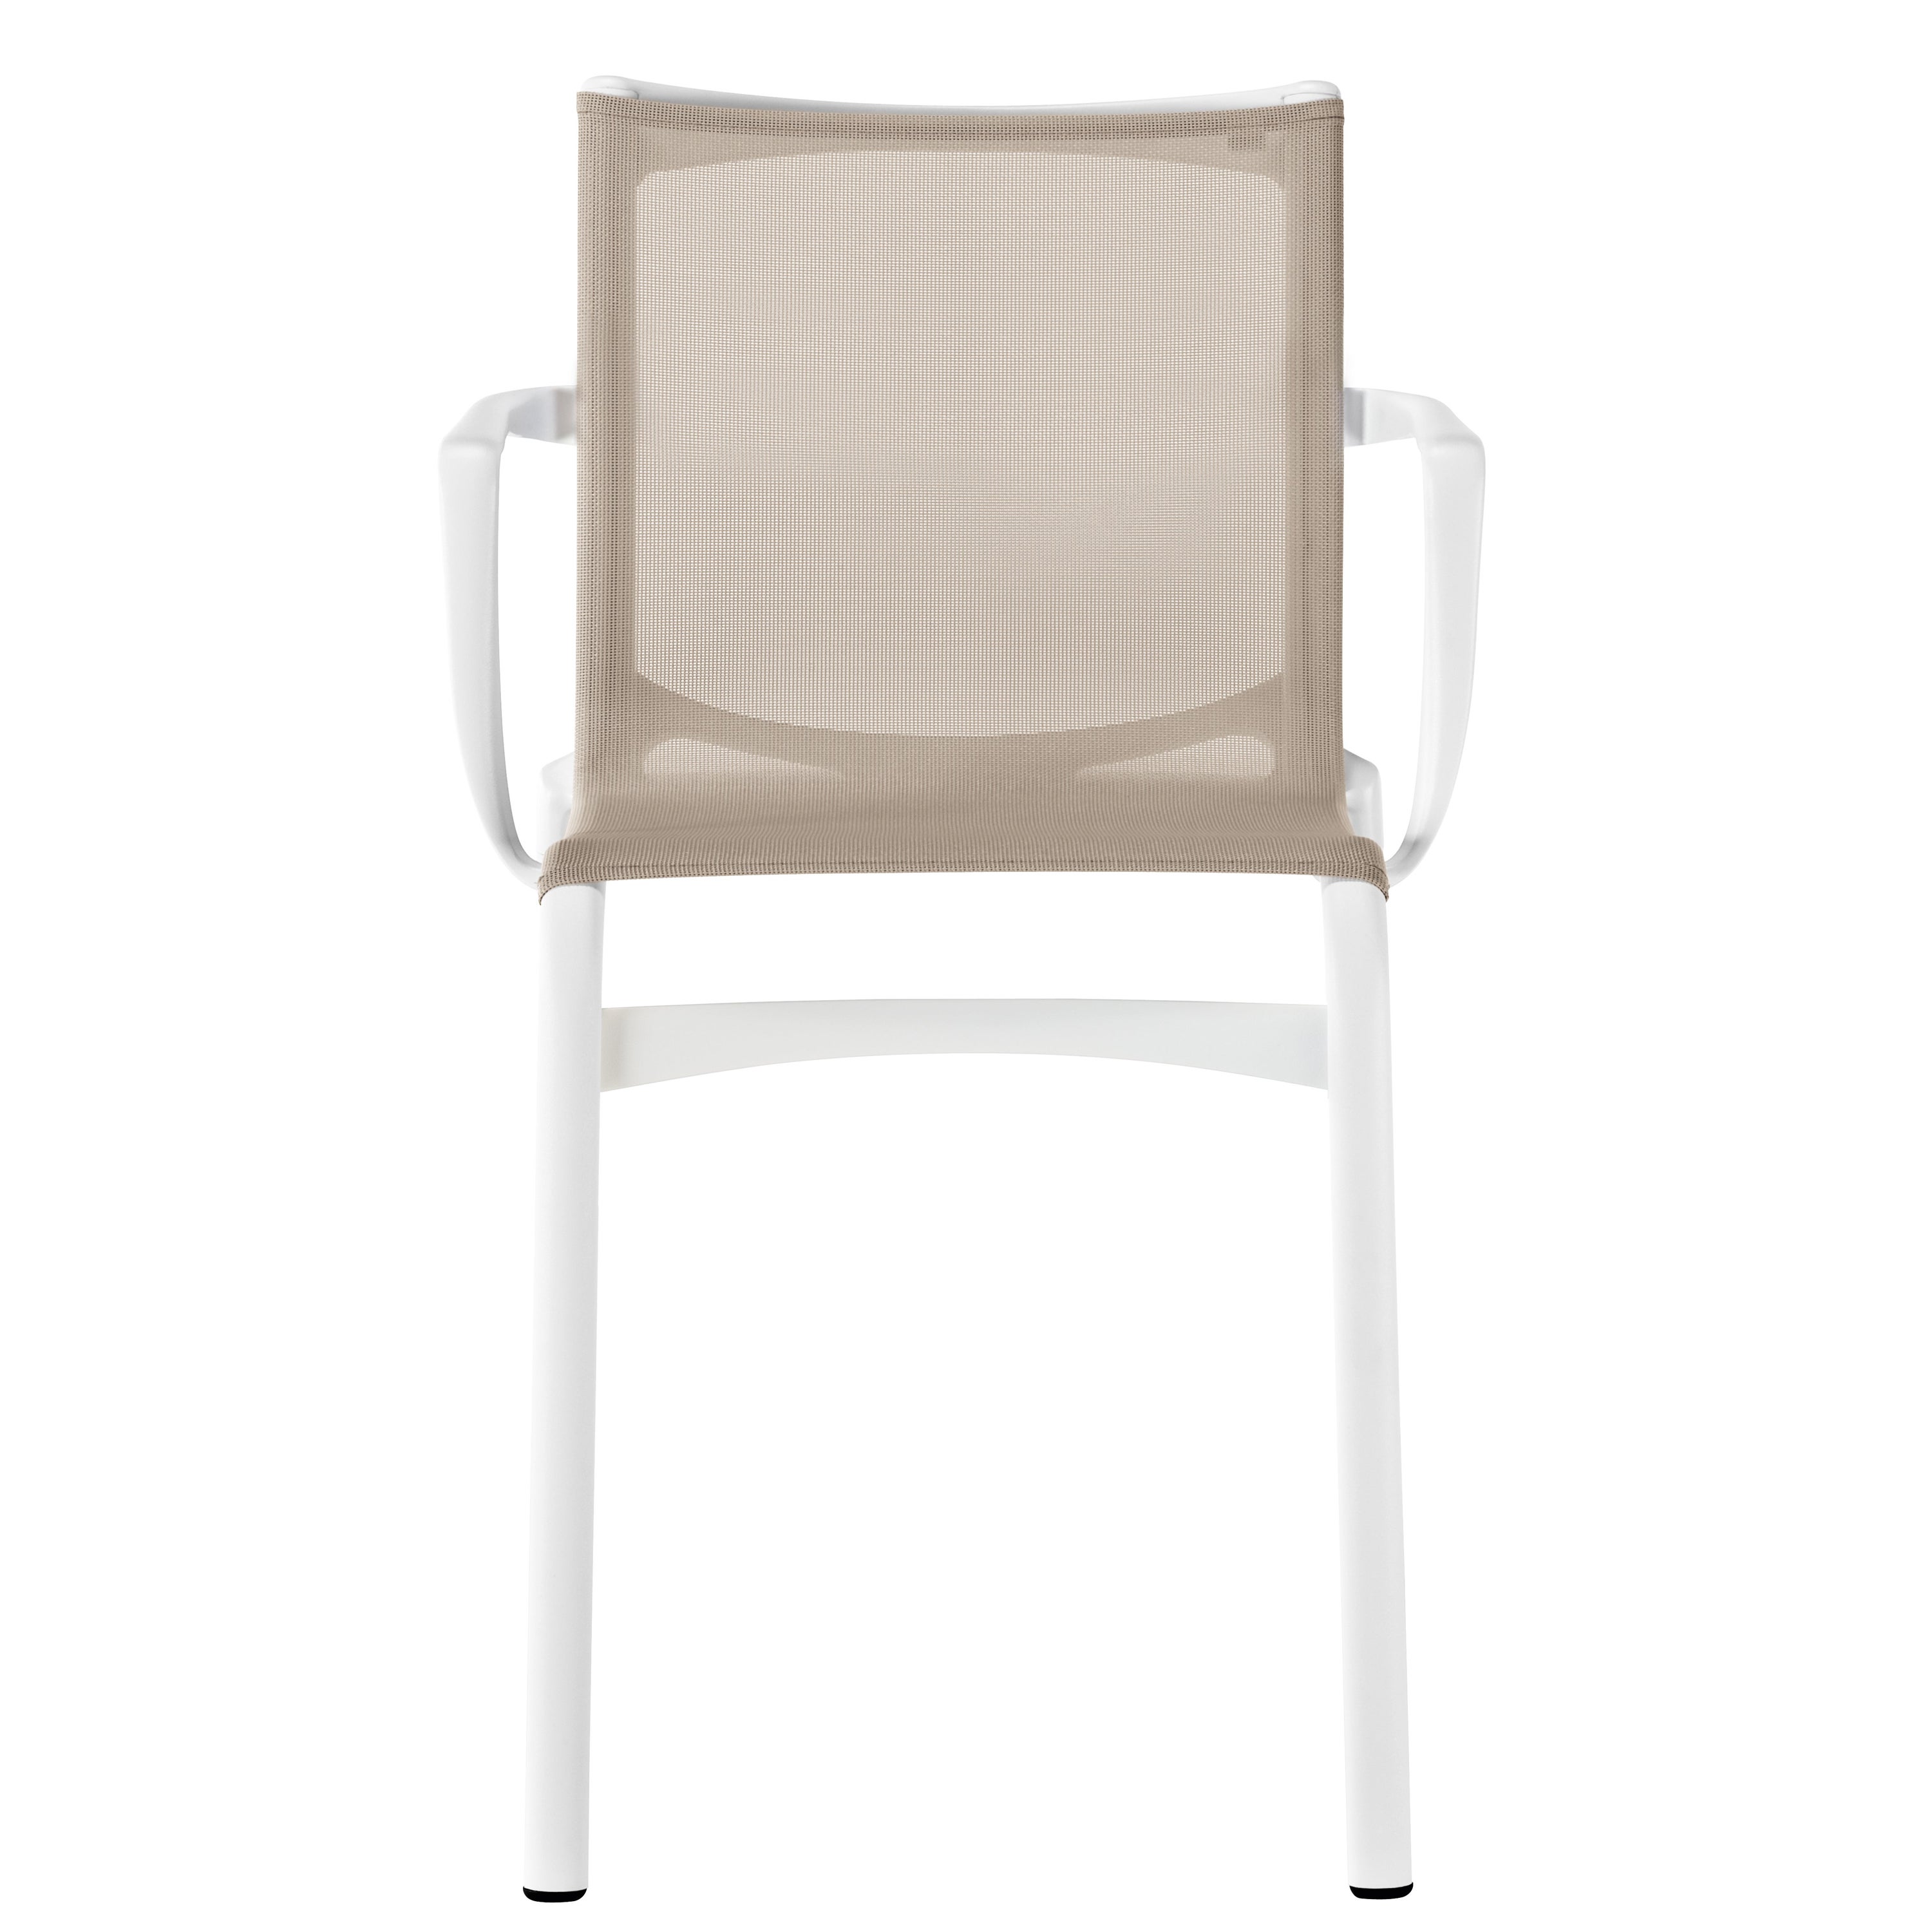 Alias 417 Stuhl mit hohem Gestell aus Sandgeflecht mit weiß lackiertem Aluminiumrahmen